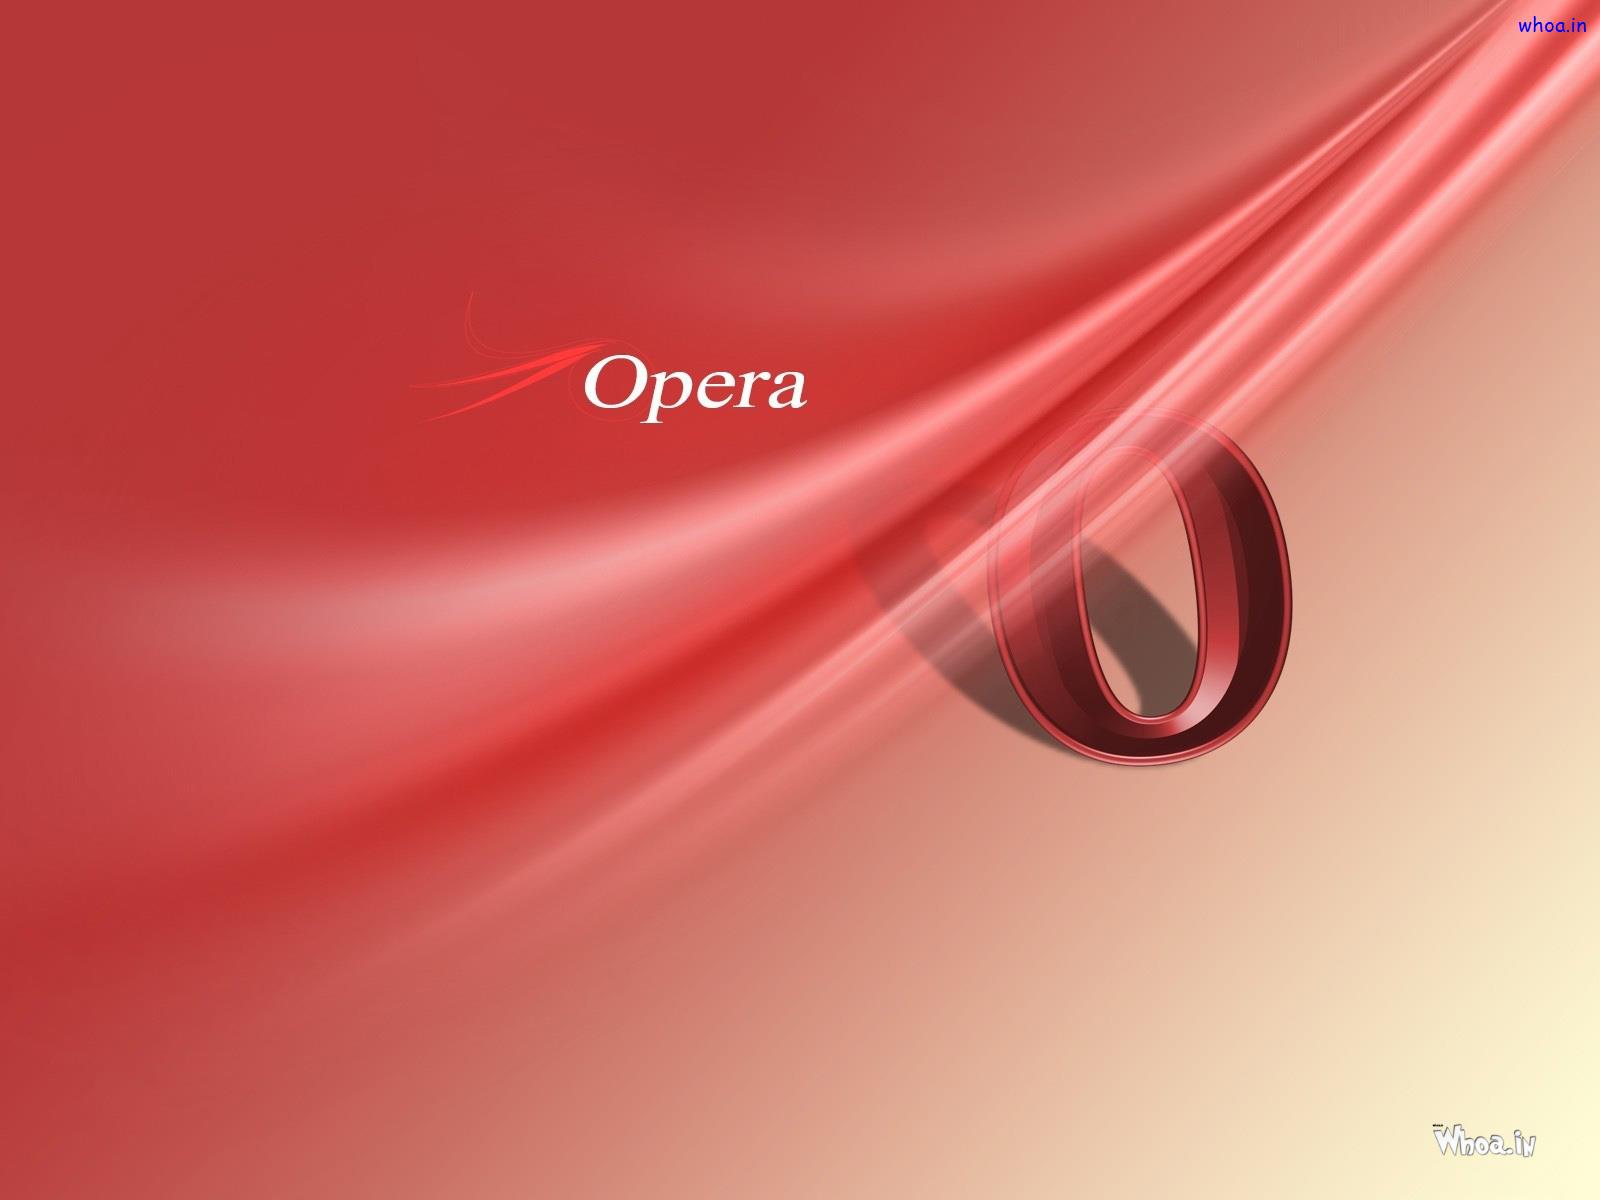 Opera Mini Red Color Desktop Wallpaper